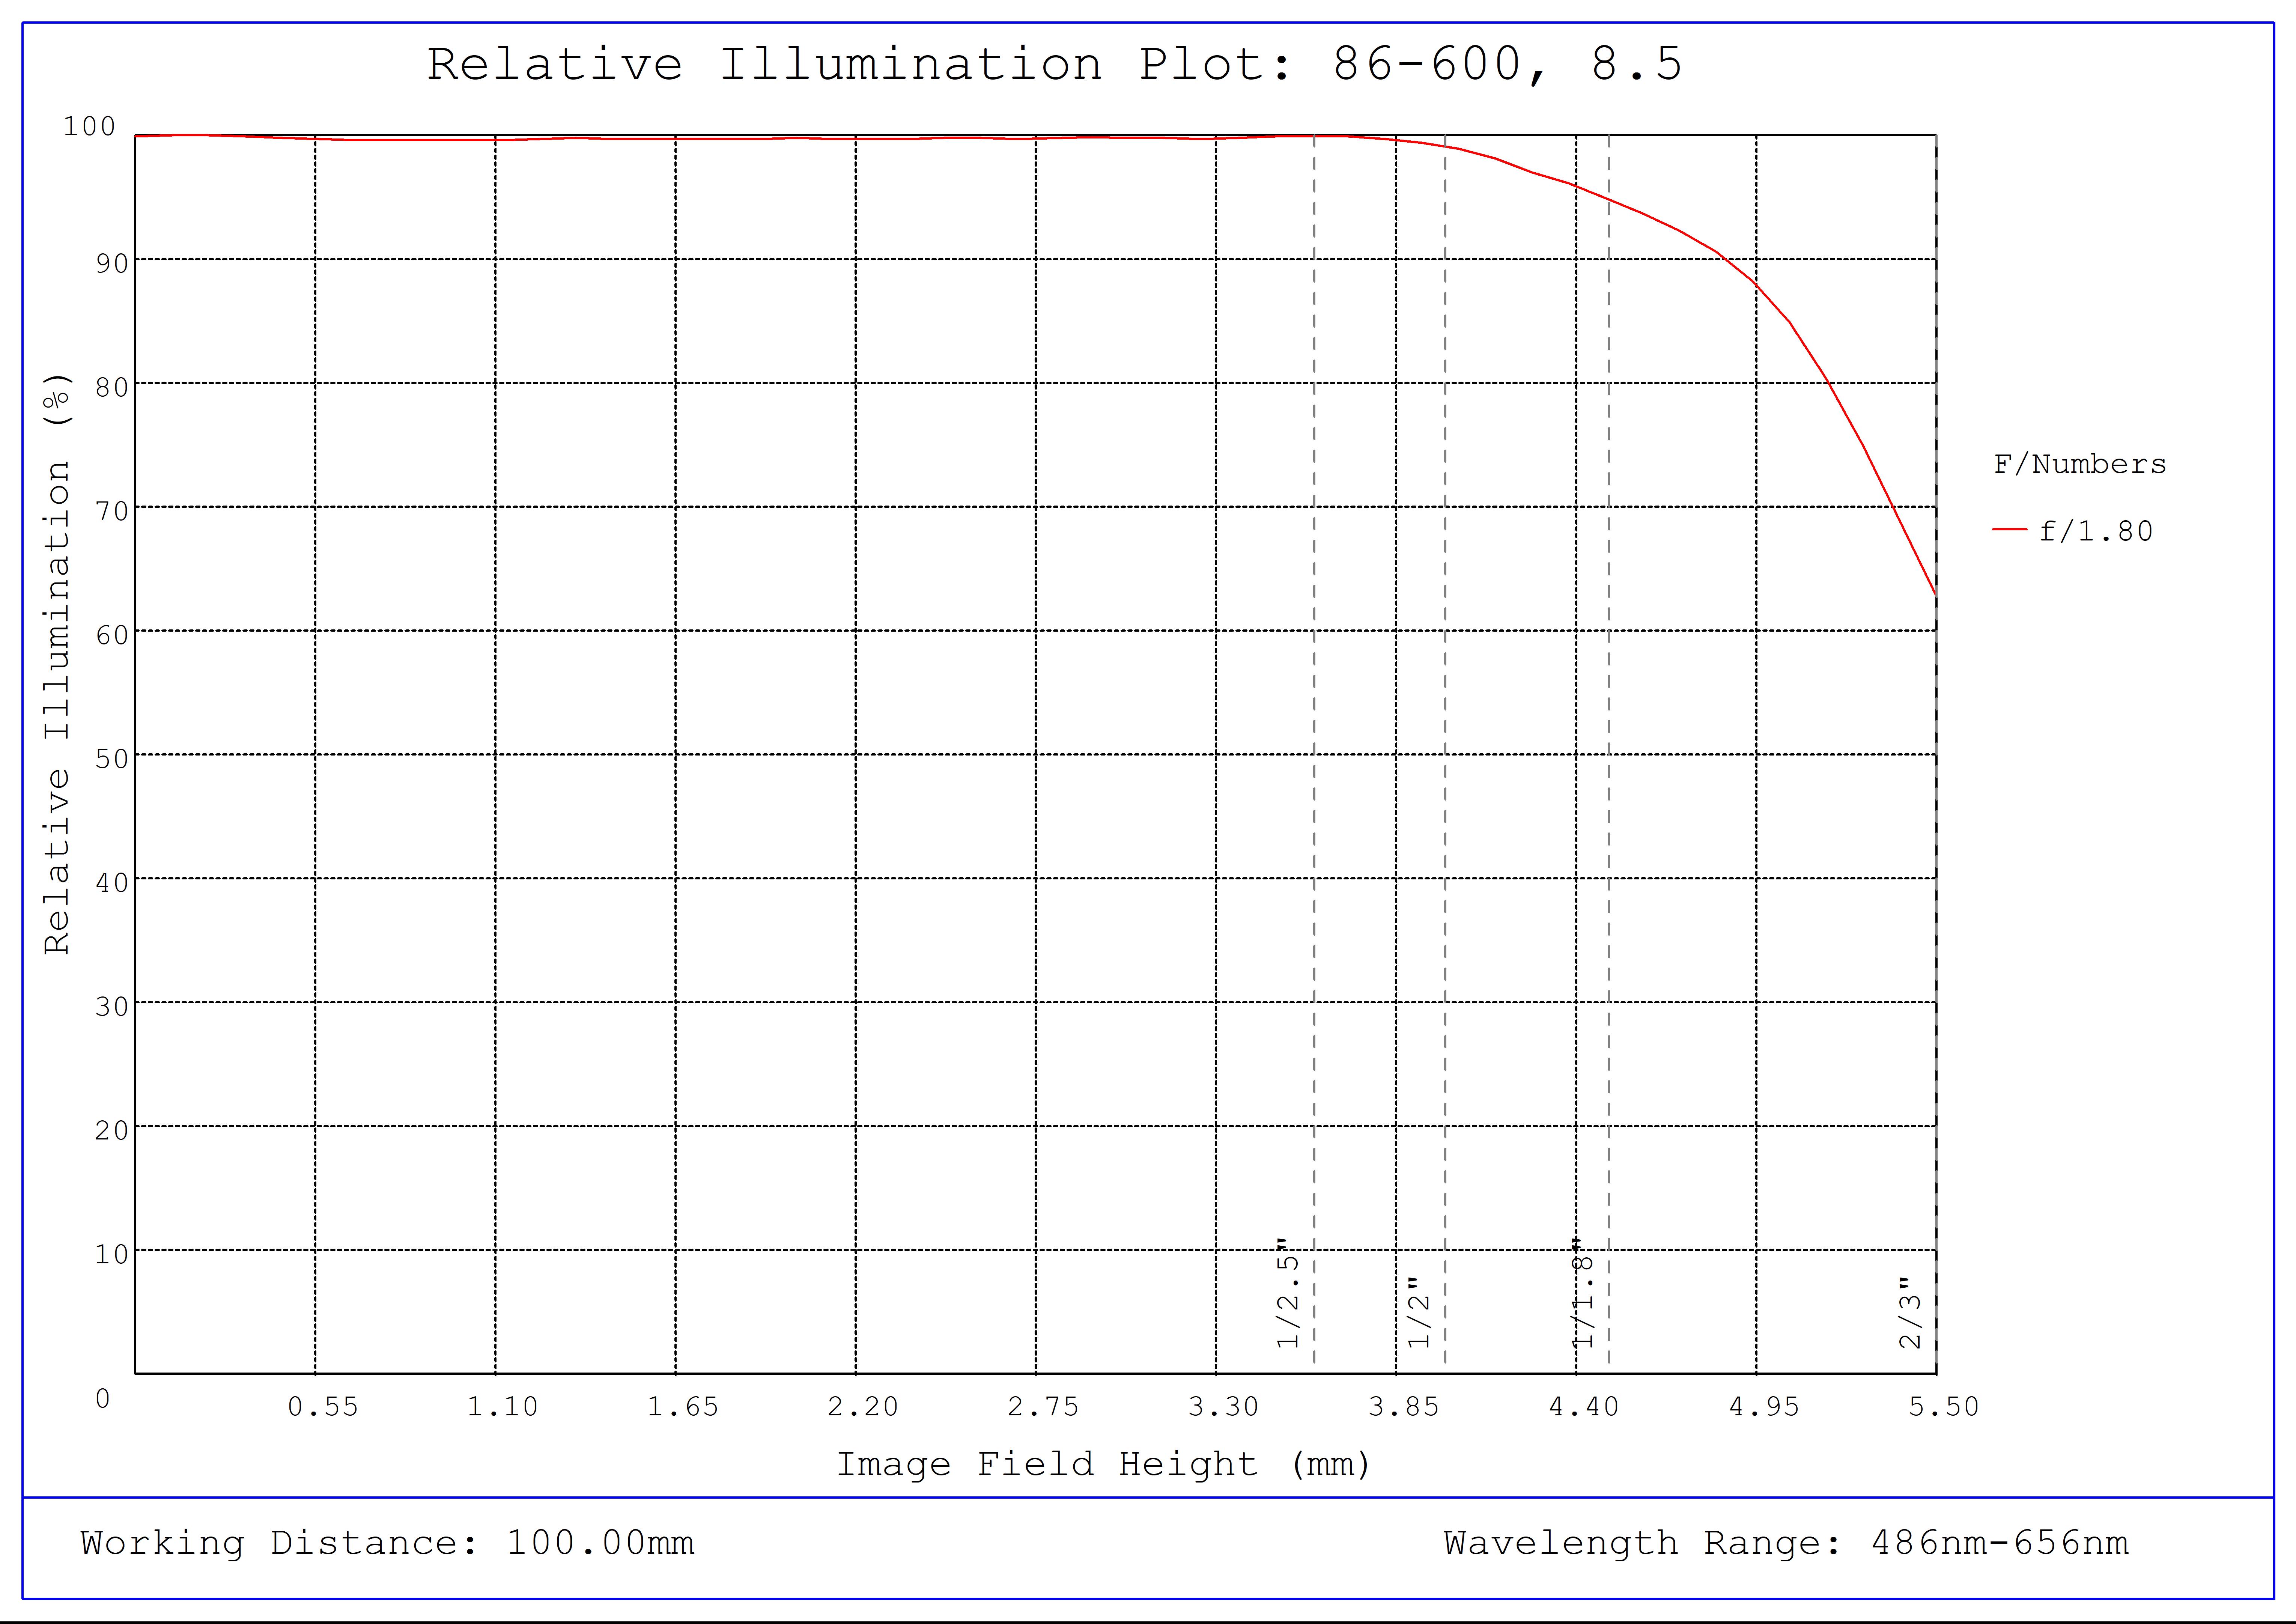 #86-600, 8.5mm, f/1.8 Ci Series Fixed Focal Length Lens, Relative Illumination Plot